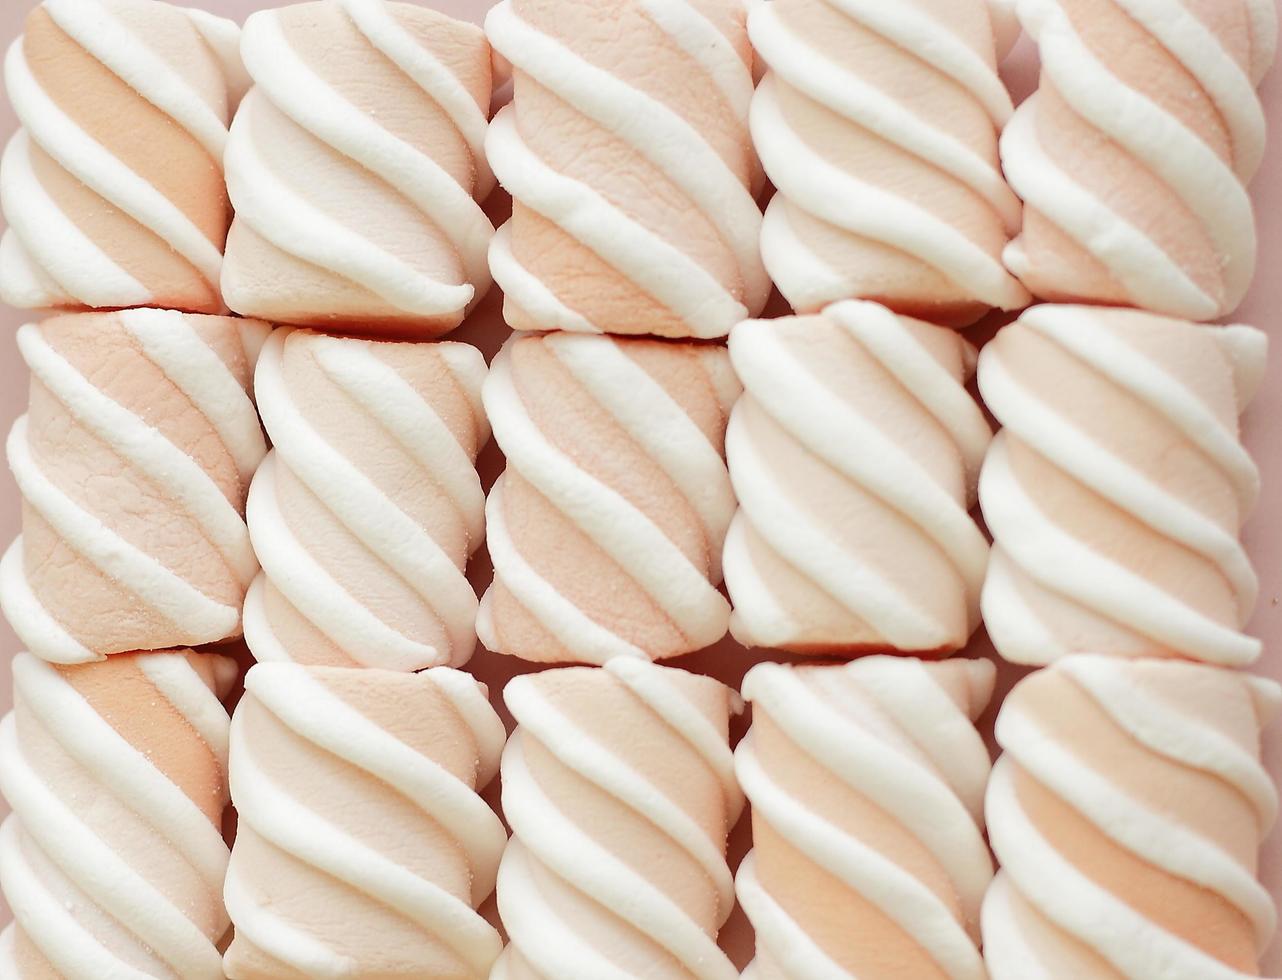 marshmallow rosa com tiras brancas foto